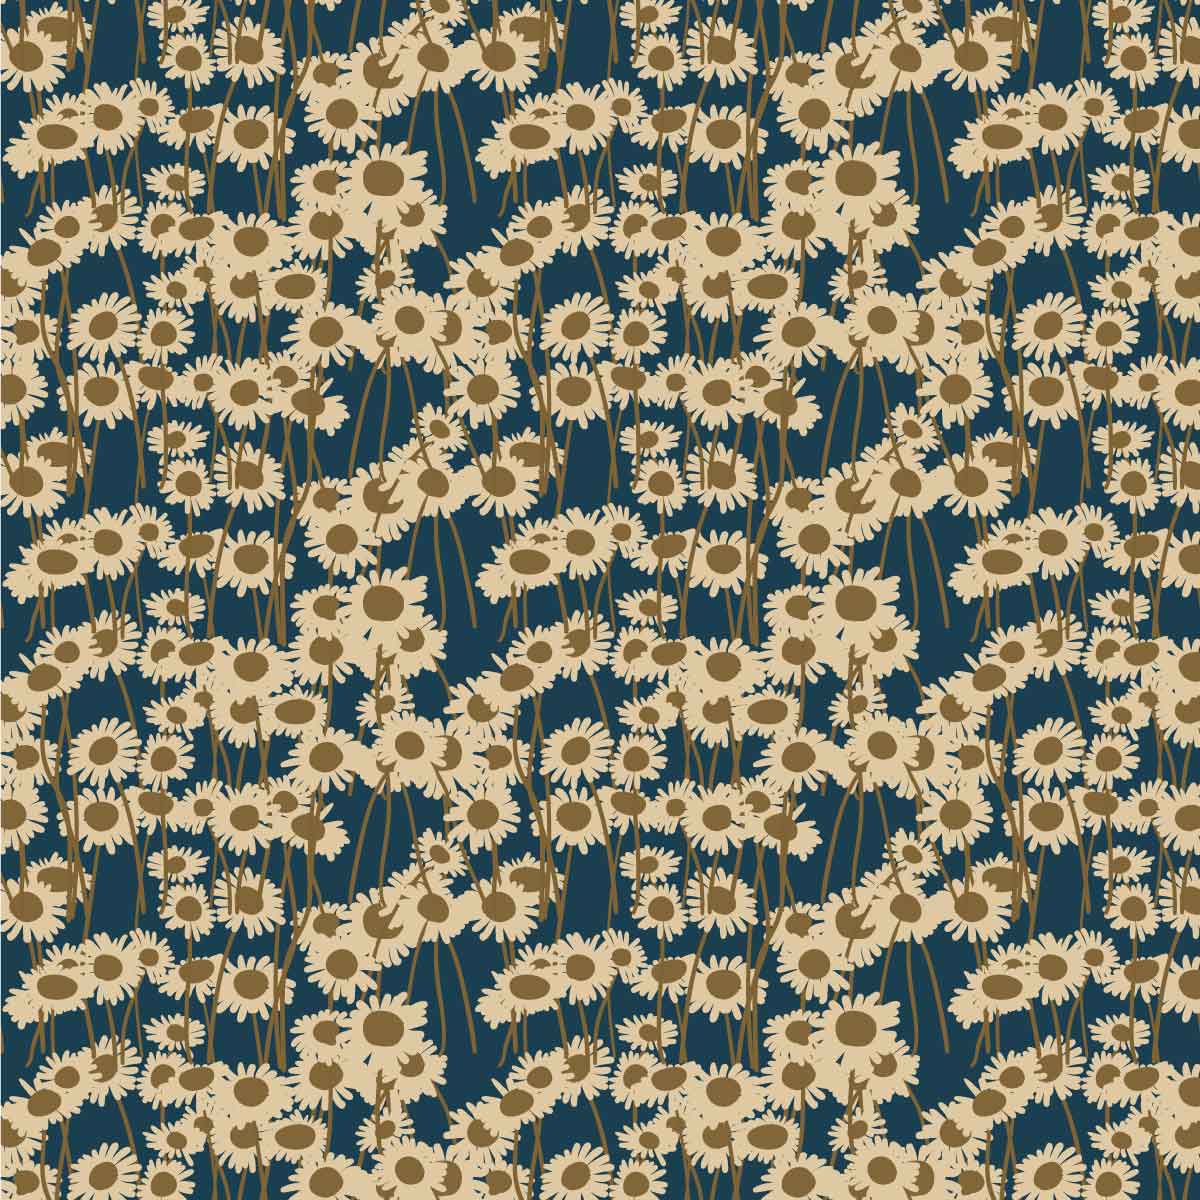 Muster: Tusensköna äng (Gänseblümchen-Wiese)